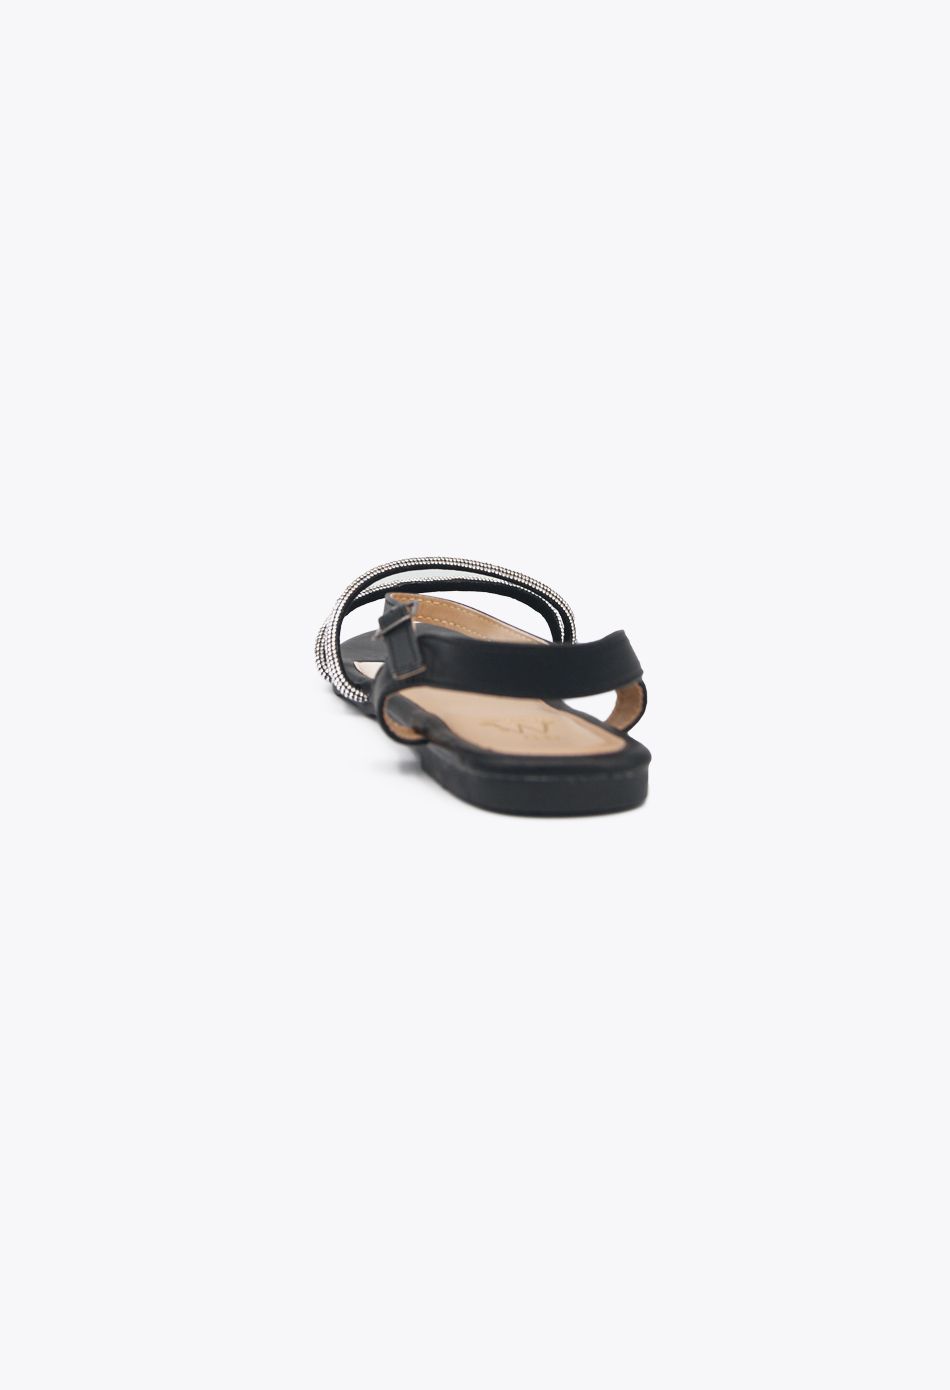 Flat Σανδάλια με στρας (Μεγάλα Νούμερα 41, 42, 43, 44) Μαύρο / DM98N-black Ανοιχτά Παπούτσια joya.gr